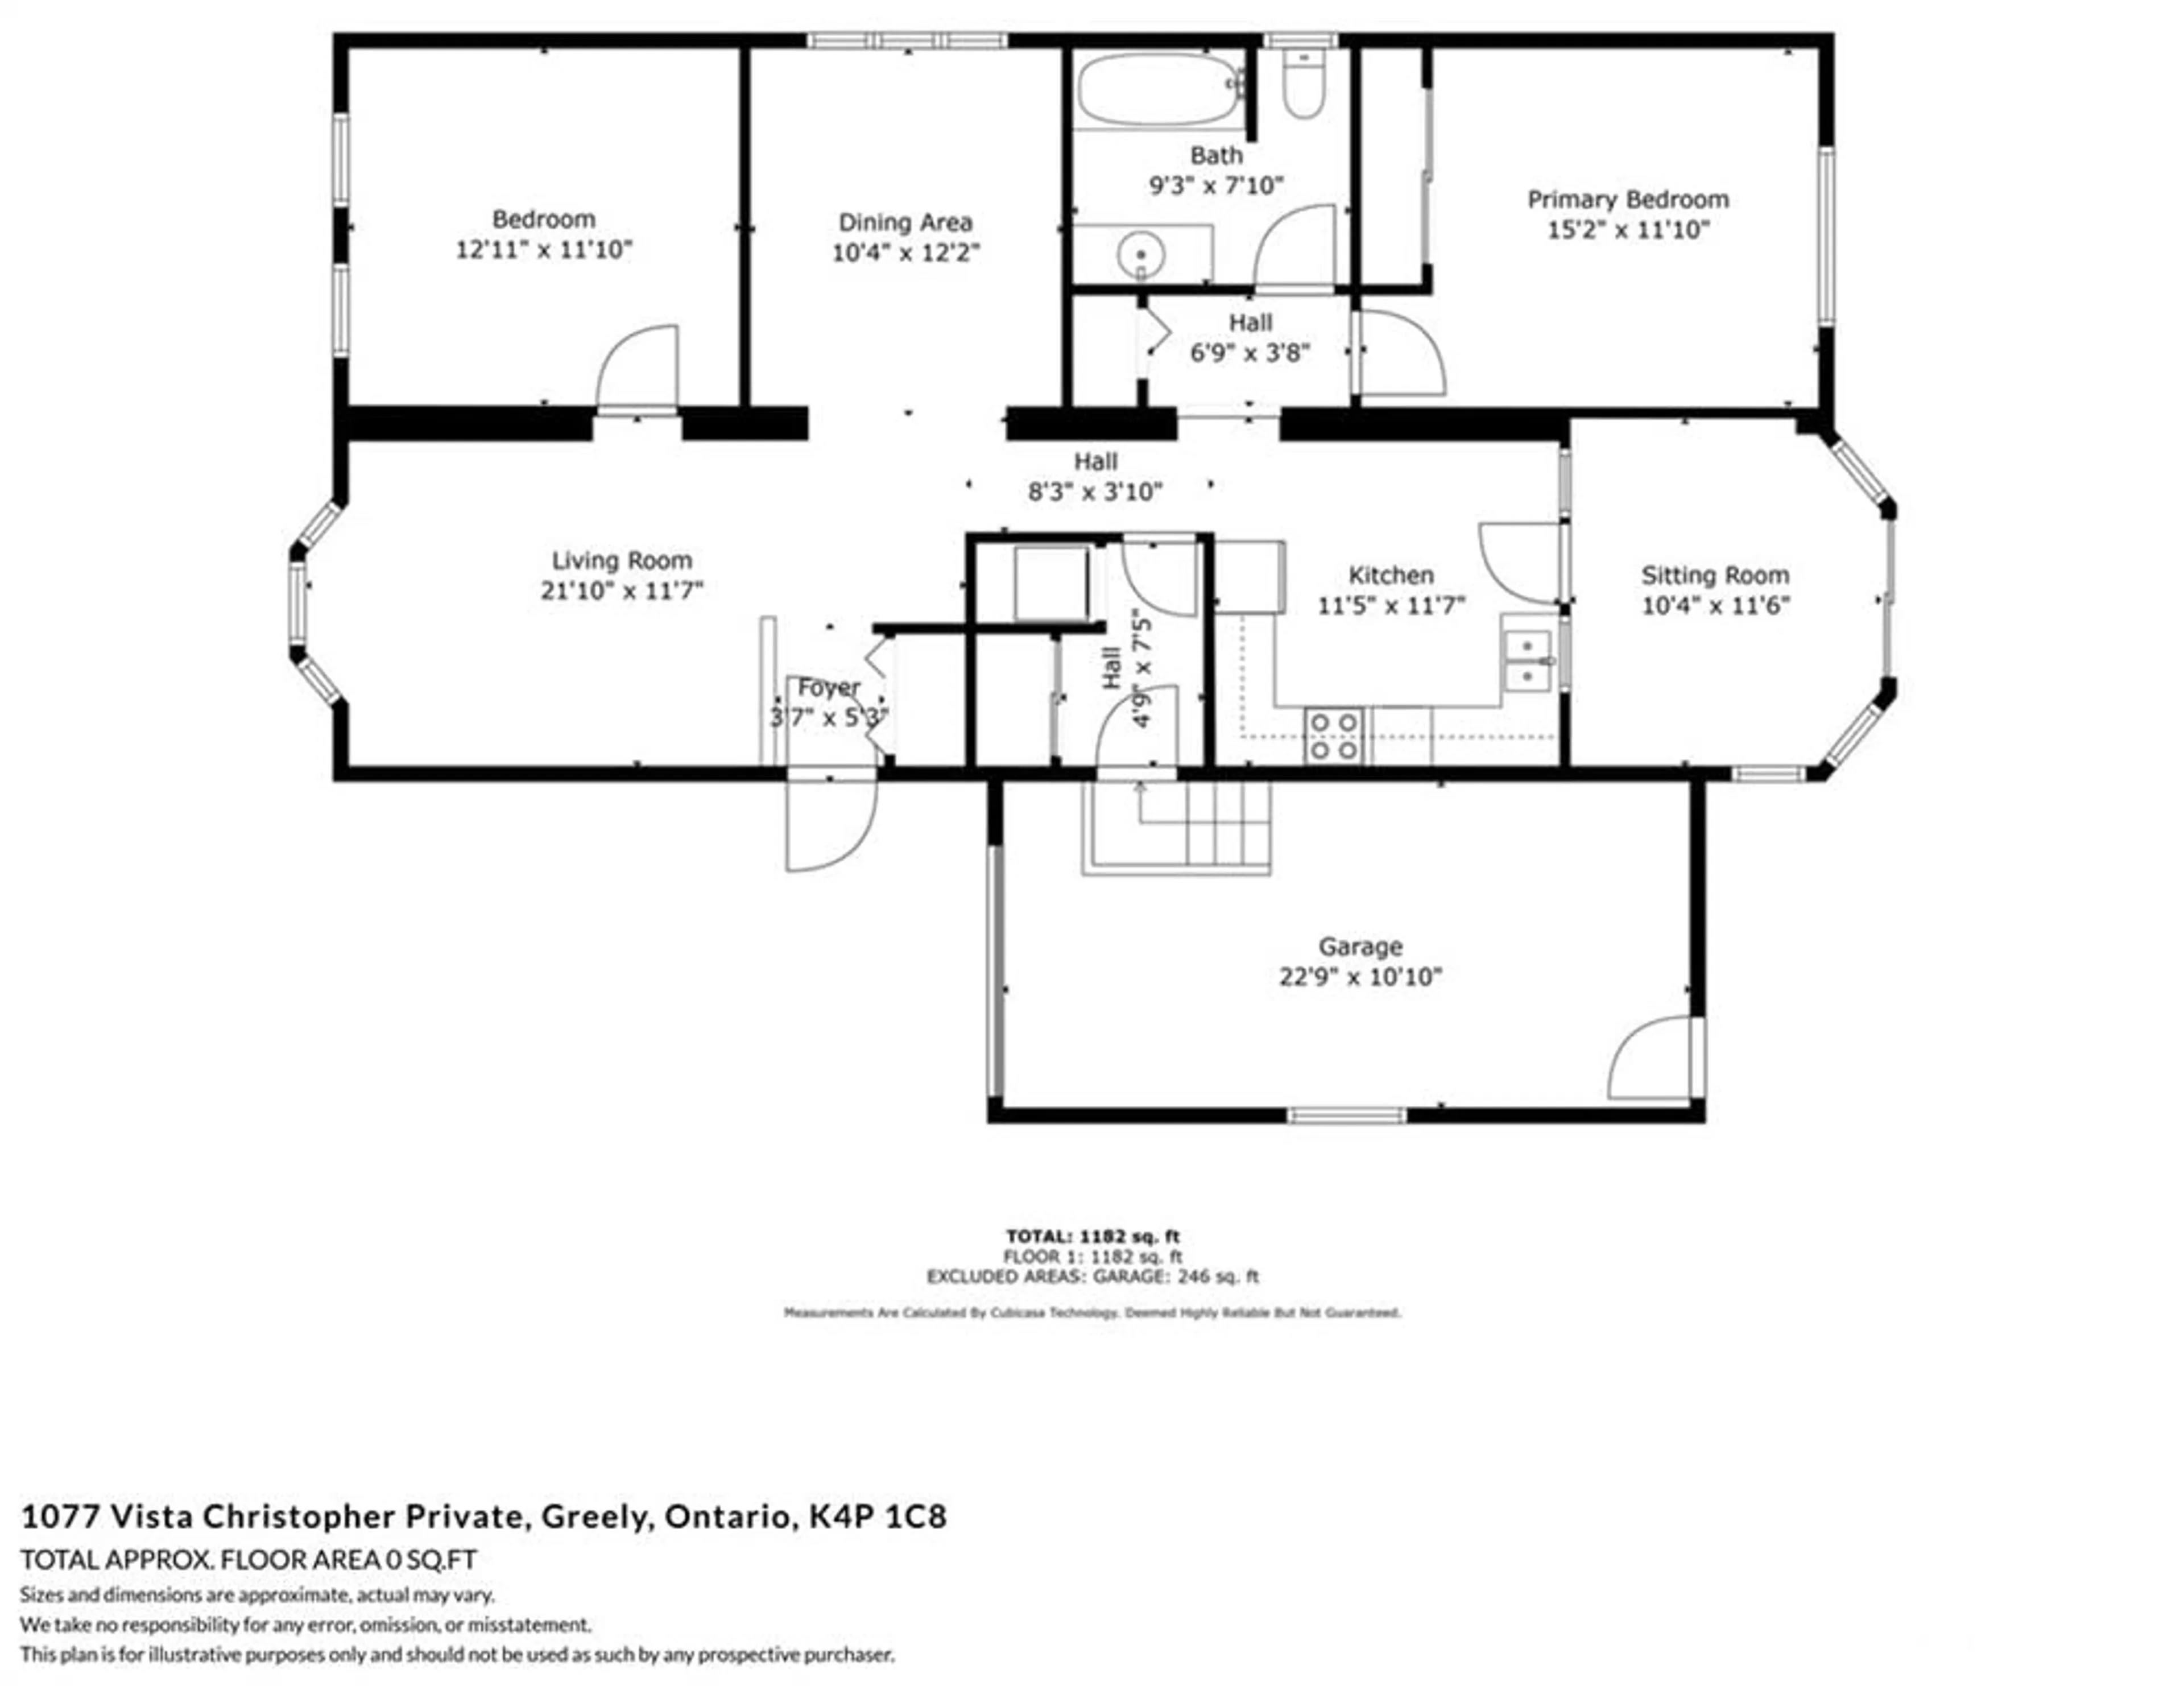 Floor plan for 1077 VISTA CHRISTOPHER Pvt, Ottawa Ontario K4P 1C8